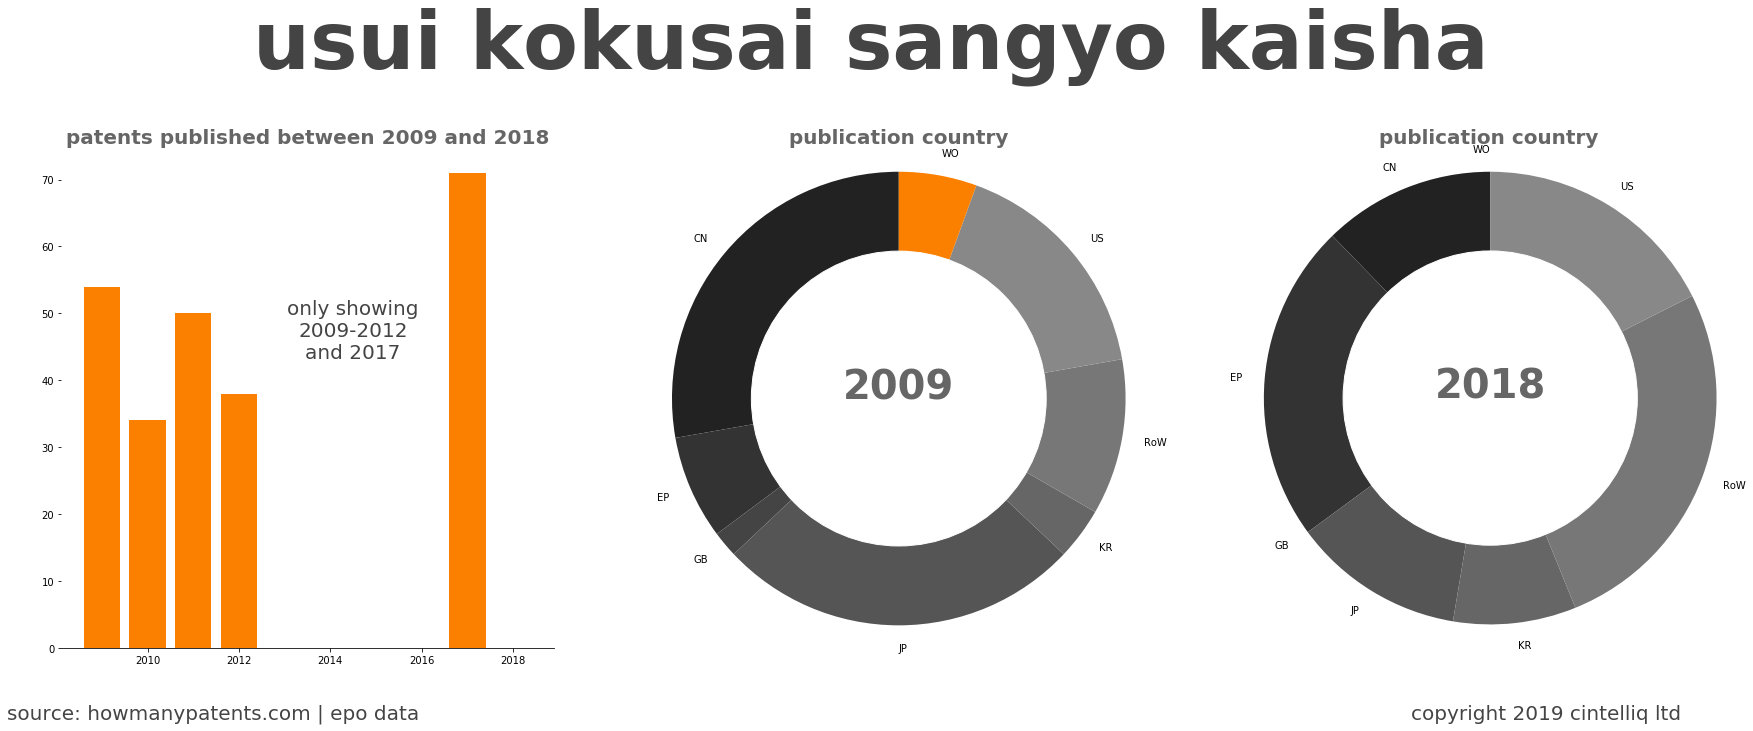 summary of patents for Usui Kokusai Sangyo Kaisha